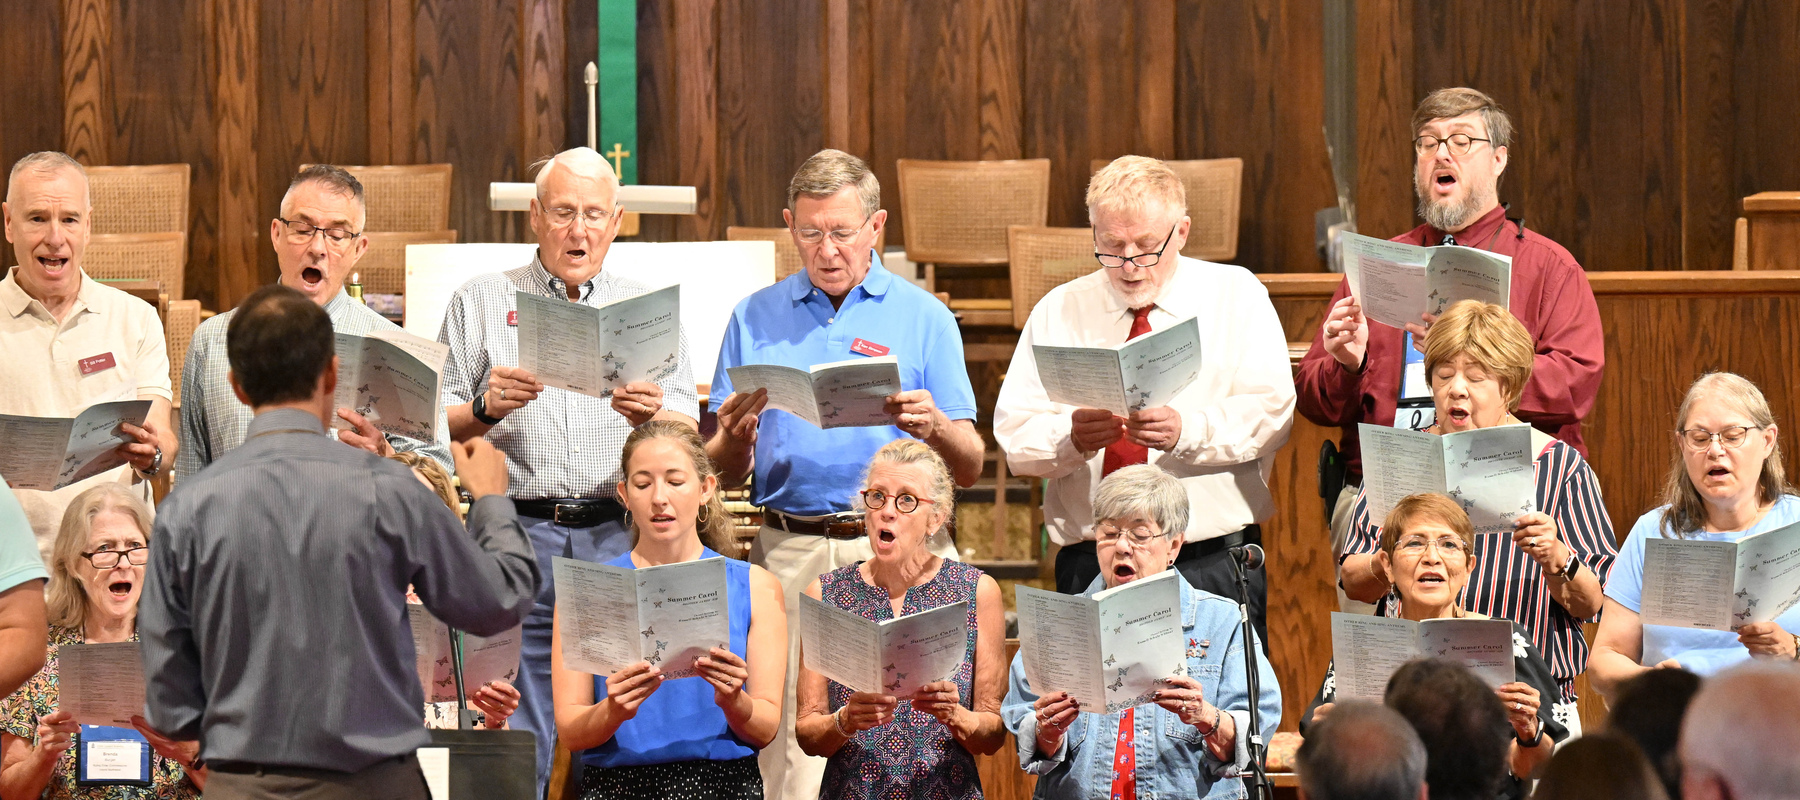 The Wasatch Presbyterian Church choir sings during morning worship. Photo by Rich Copley.